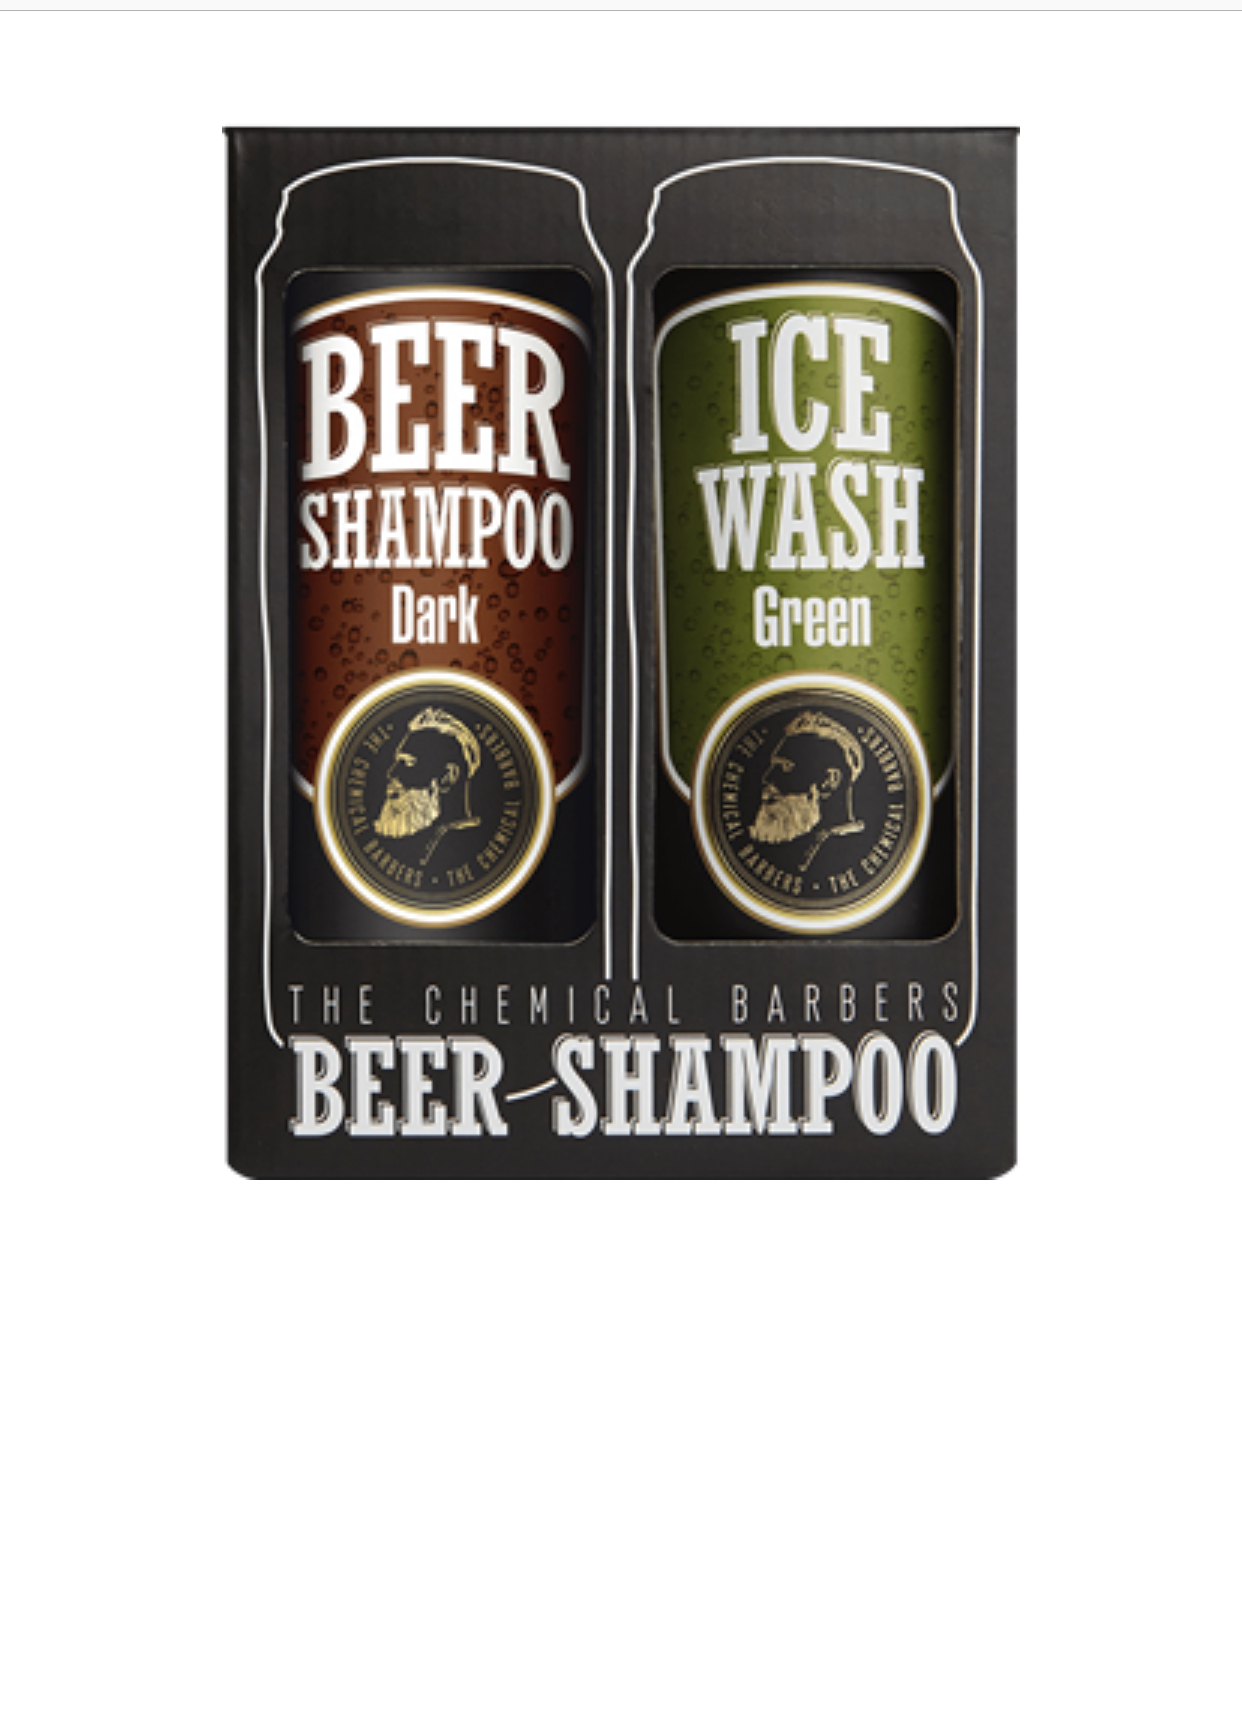 The chemical barbers. The Chemical Barbers гель. Beer Shampoo шампунь мужской. Набор the Chemical Barbers Beer Shampoo Gift Set Original. Chemical Barbers дезодорант.